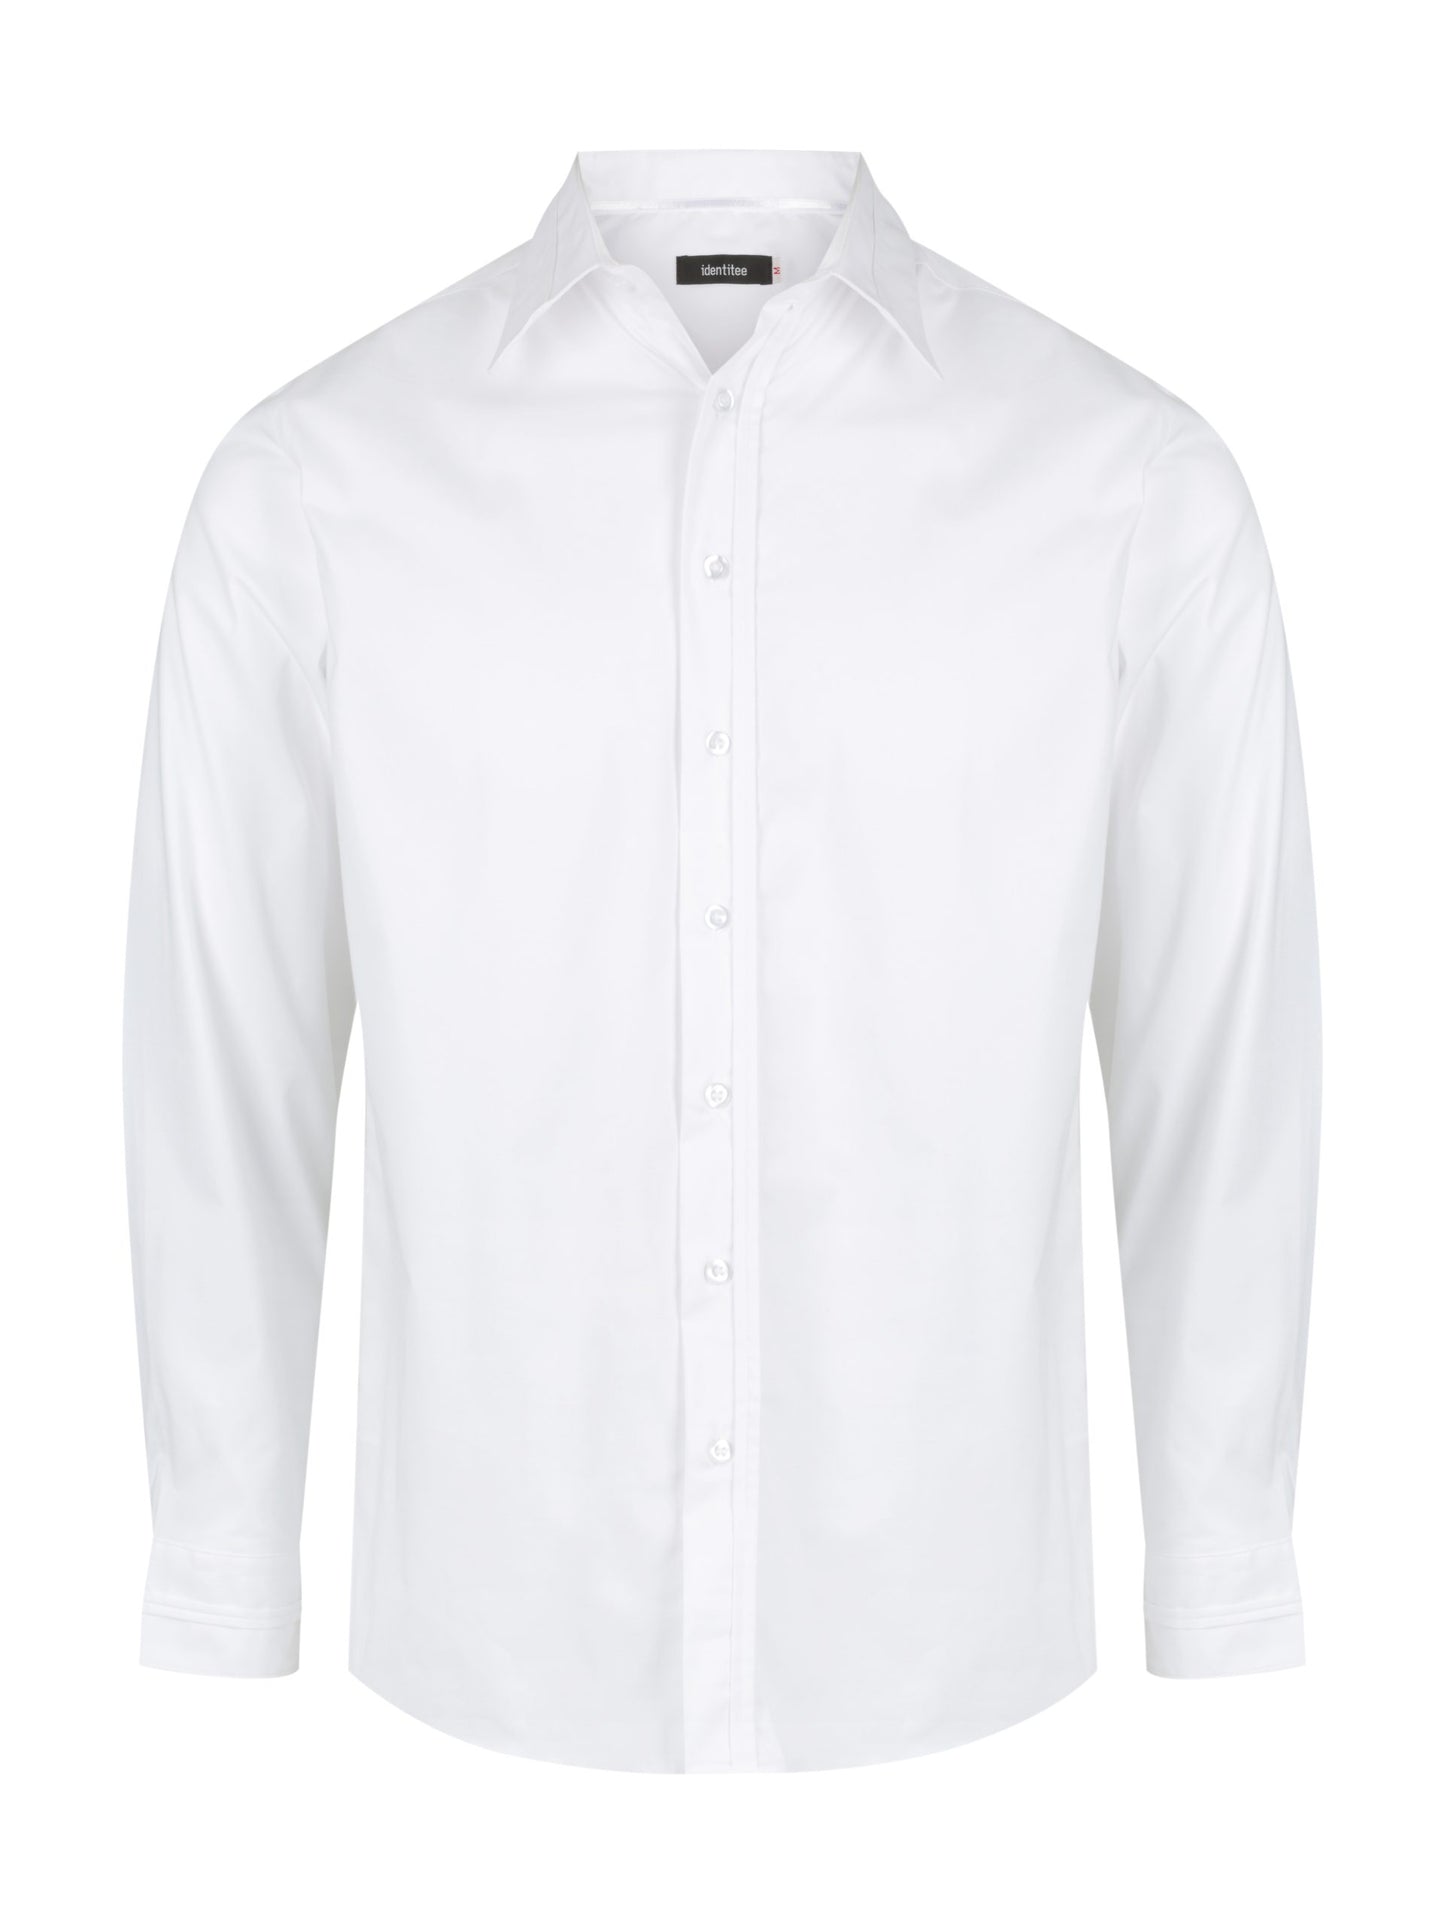 Identitee - W22 – Men’s Vegas Long Sleeve Shirt